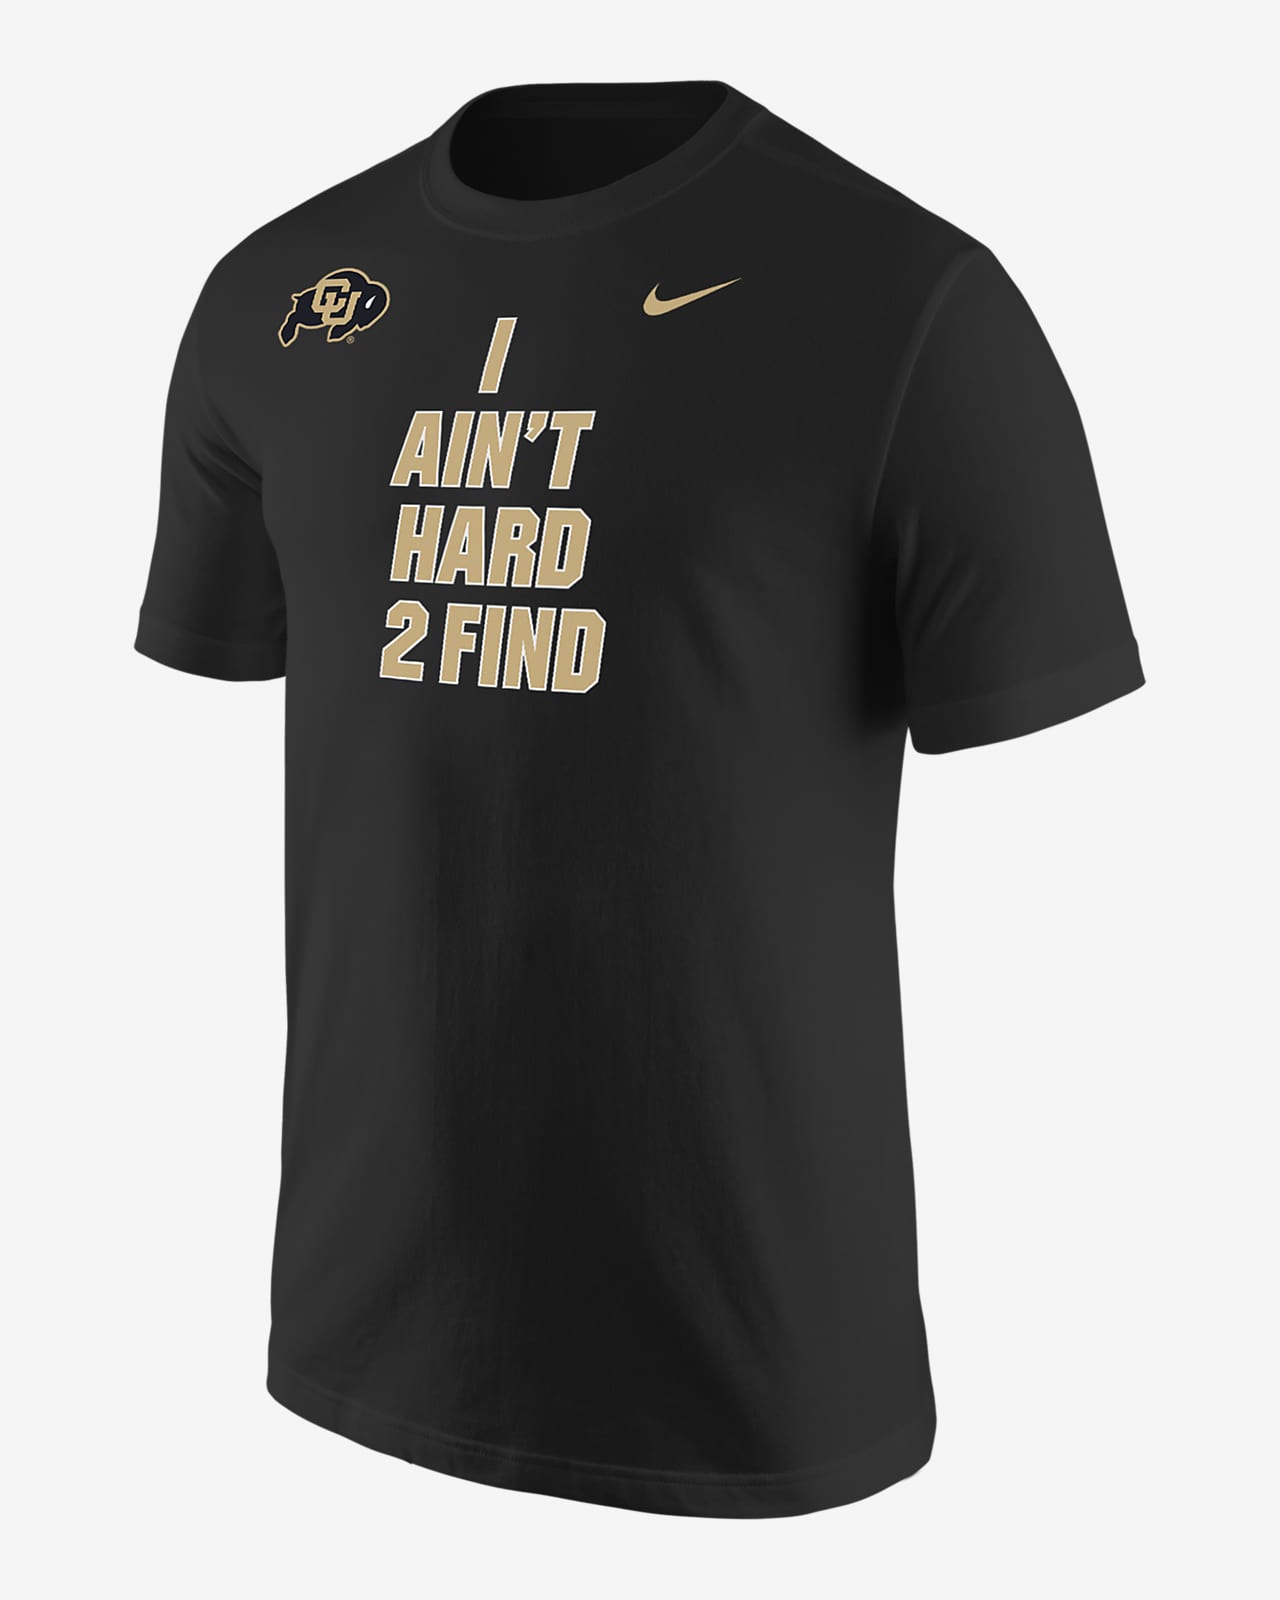 Colorado Men's Nike College T-Shirt